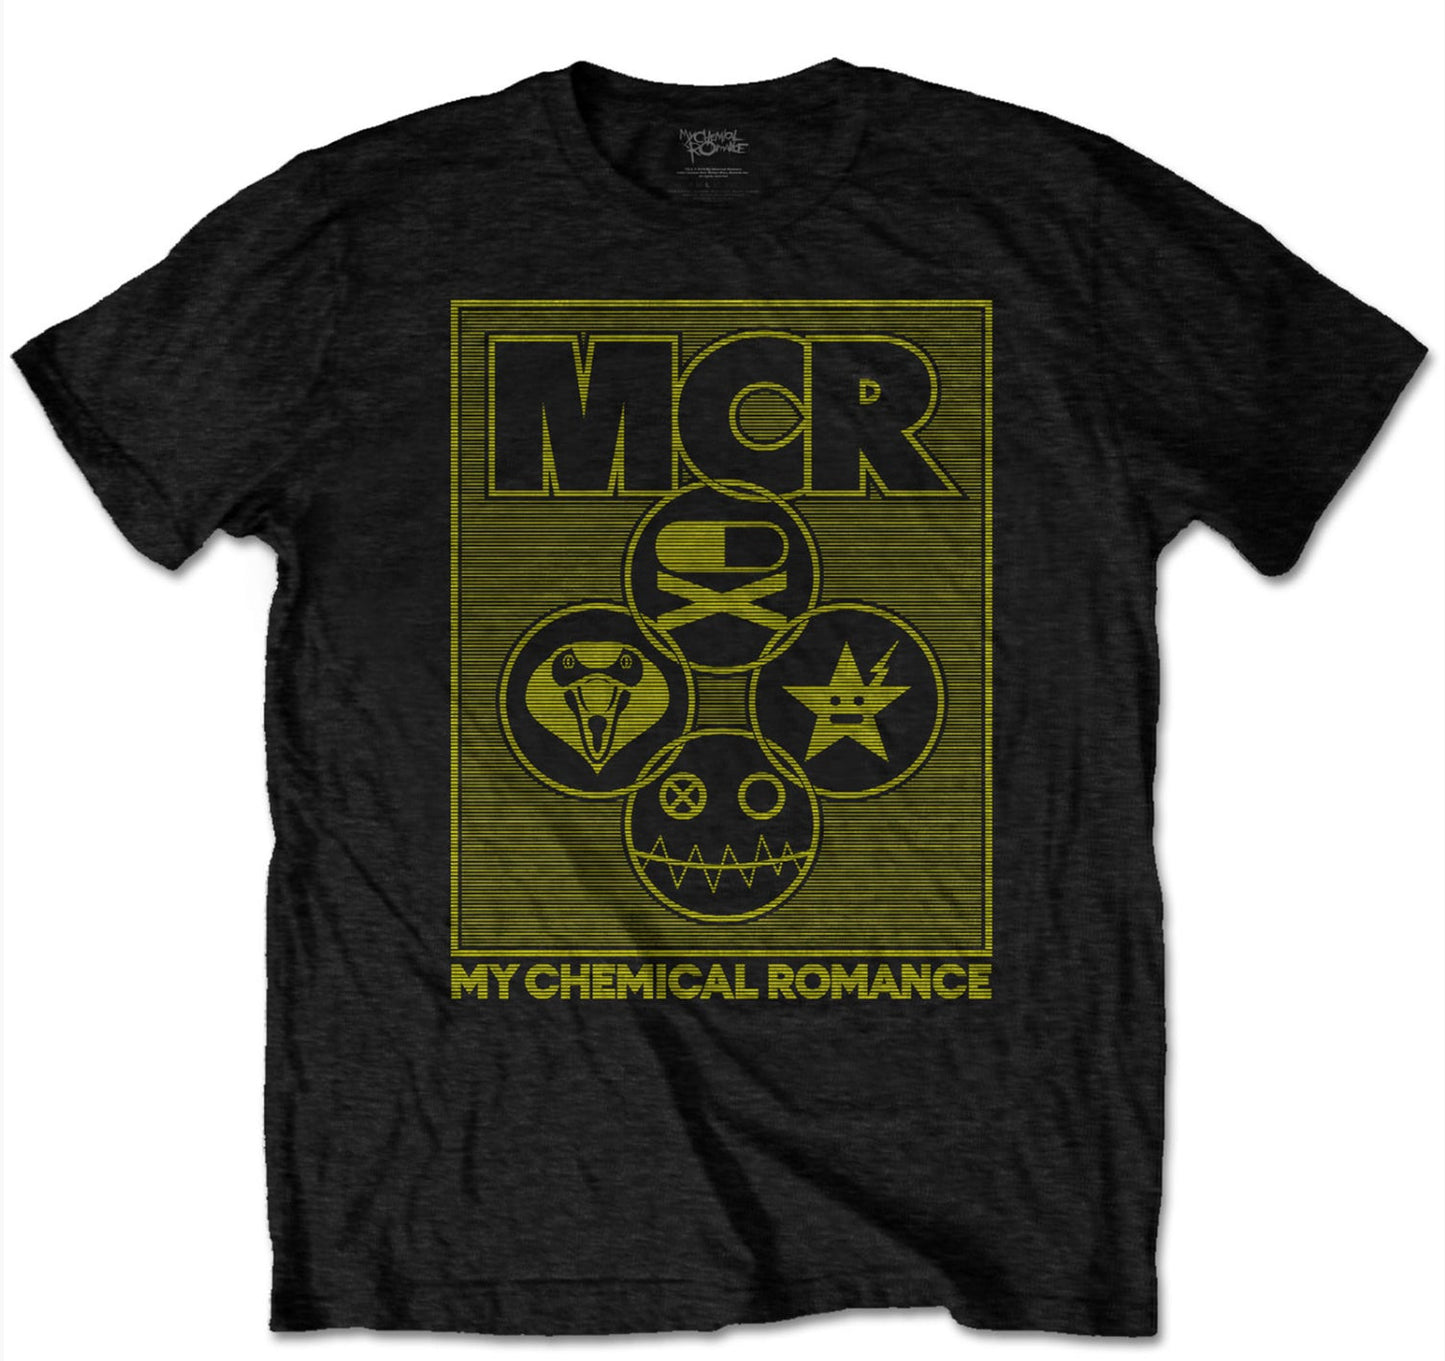 MCR T-shirts